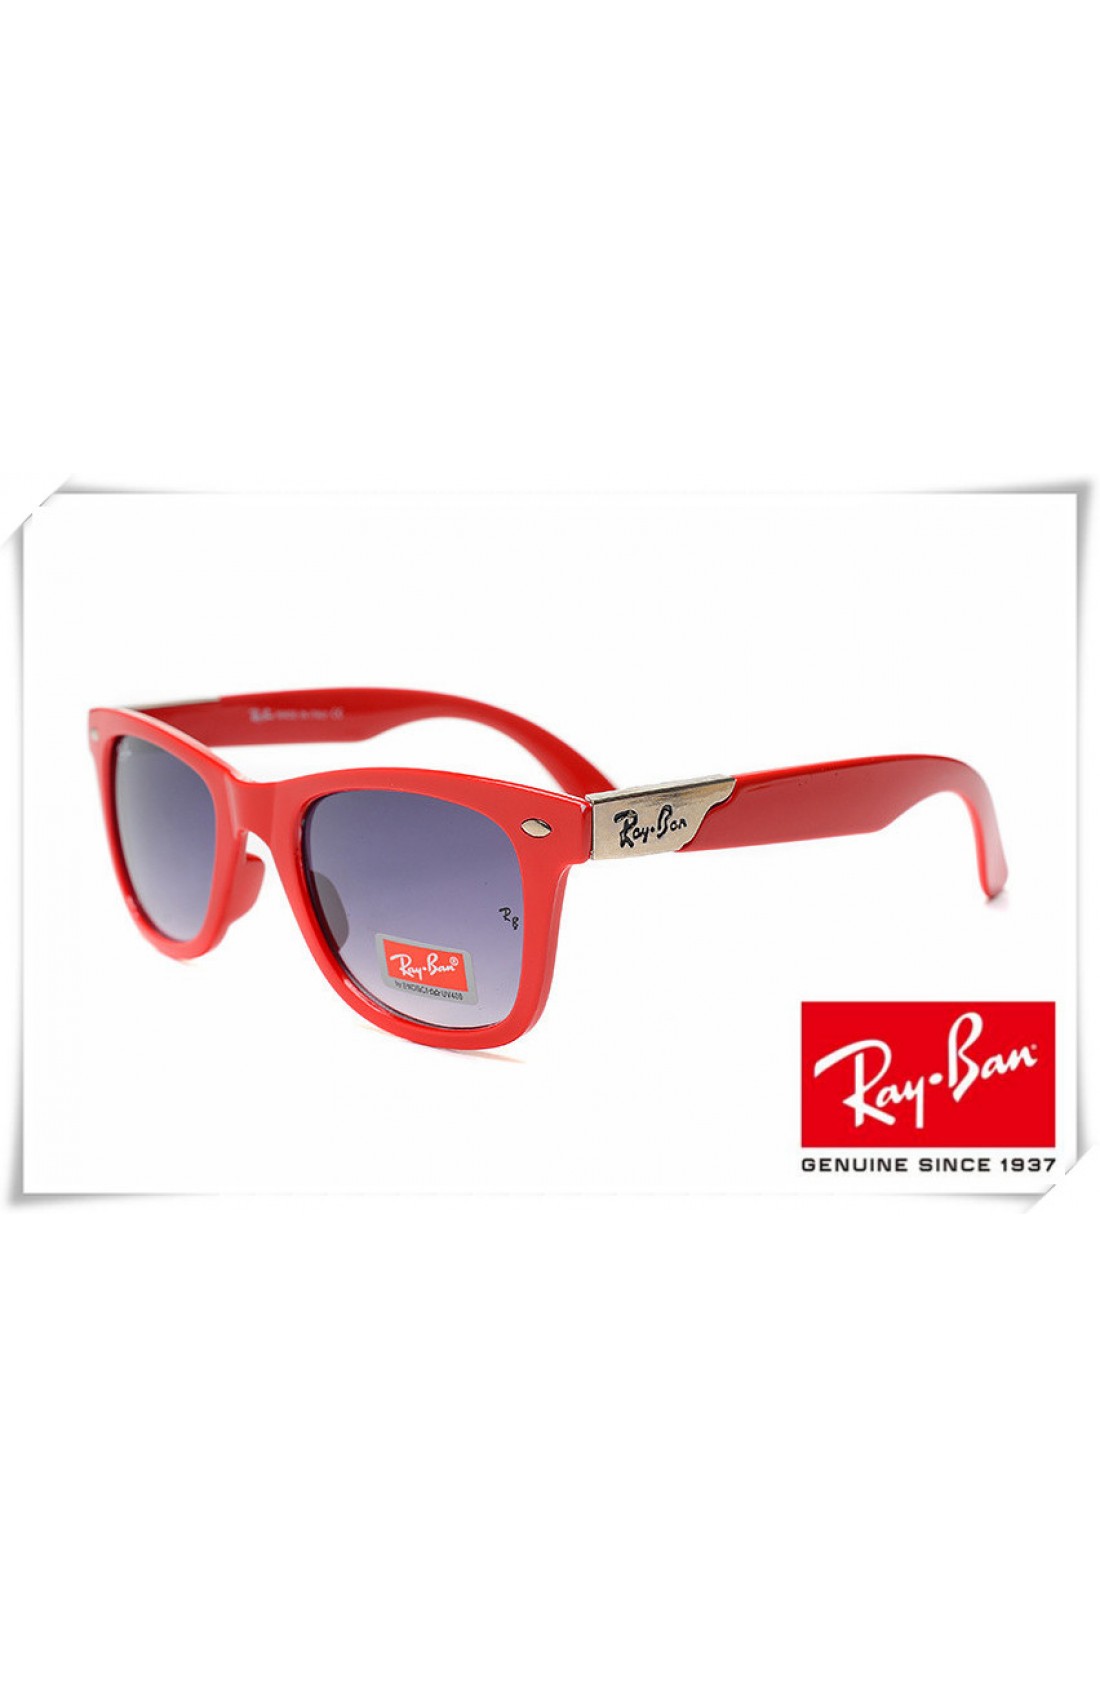 red frame wayfarer sunglasses